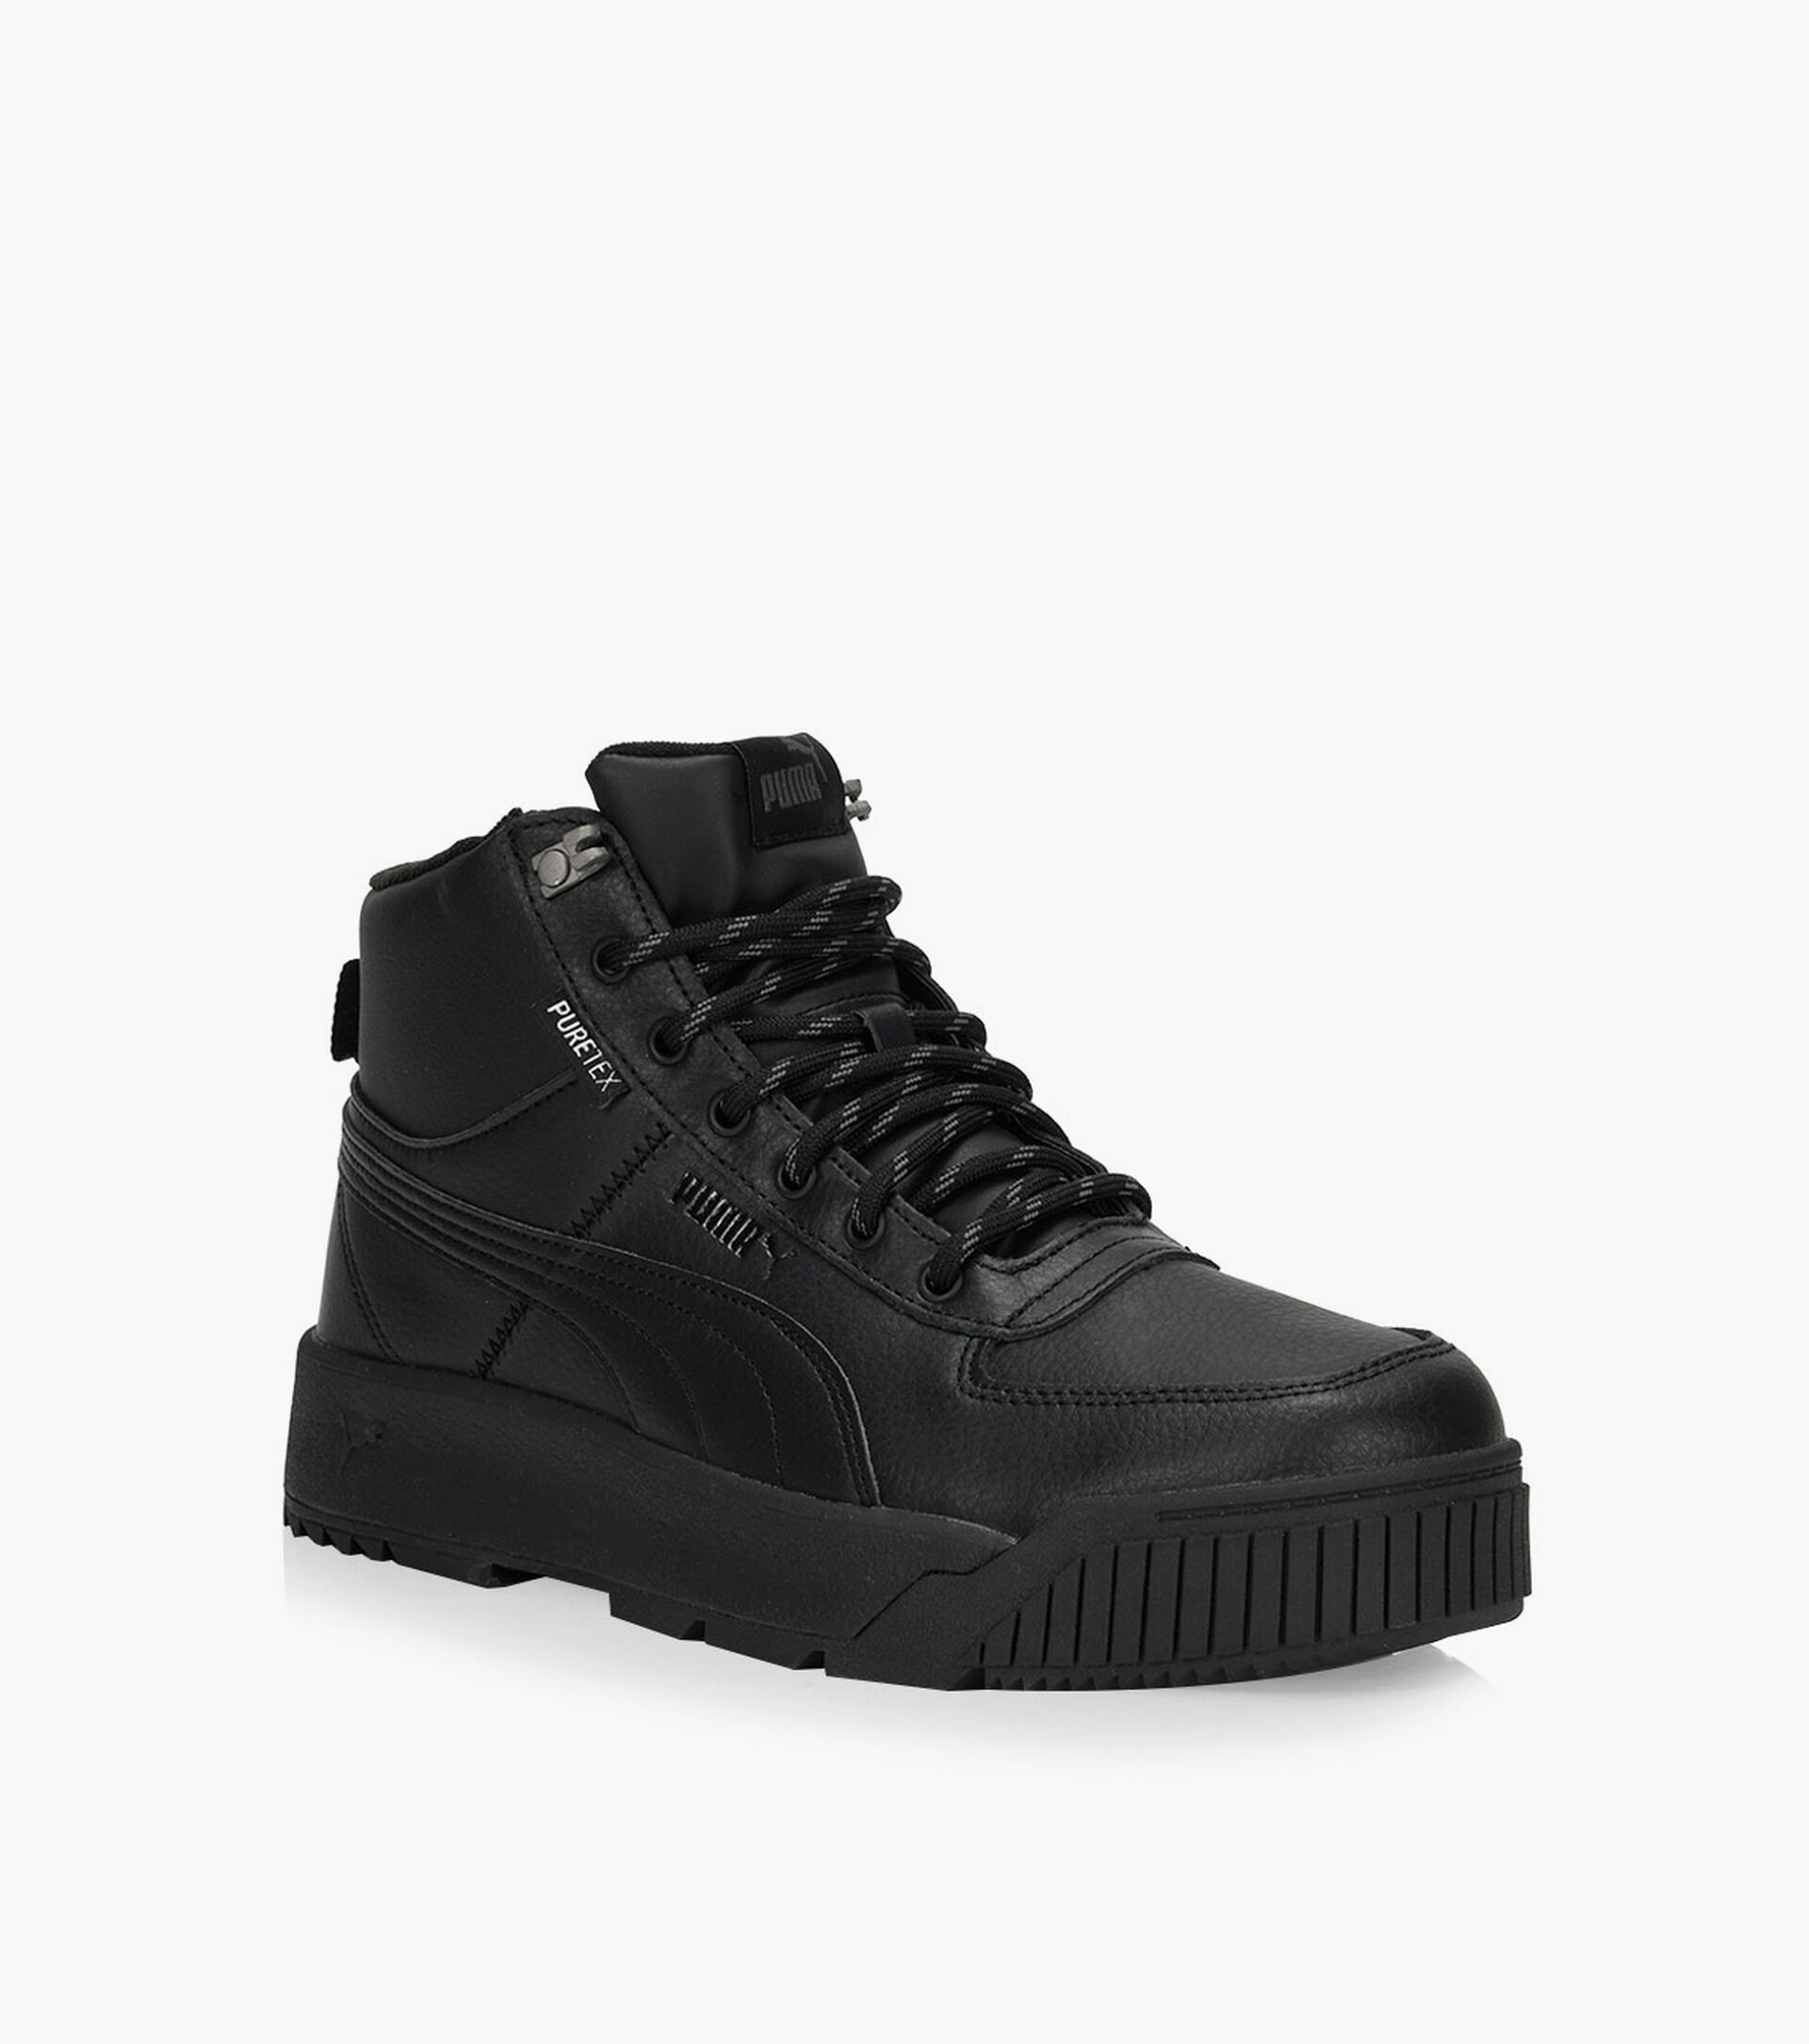 PUMA TARRENZ SB PURETEX - Black Leather | Browns Shoes